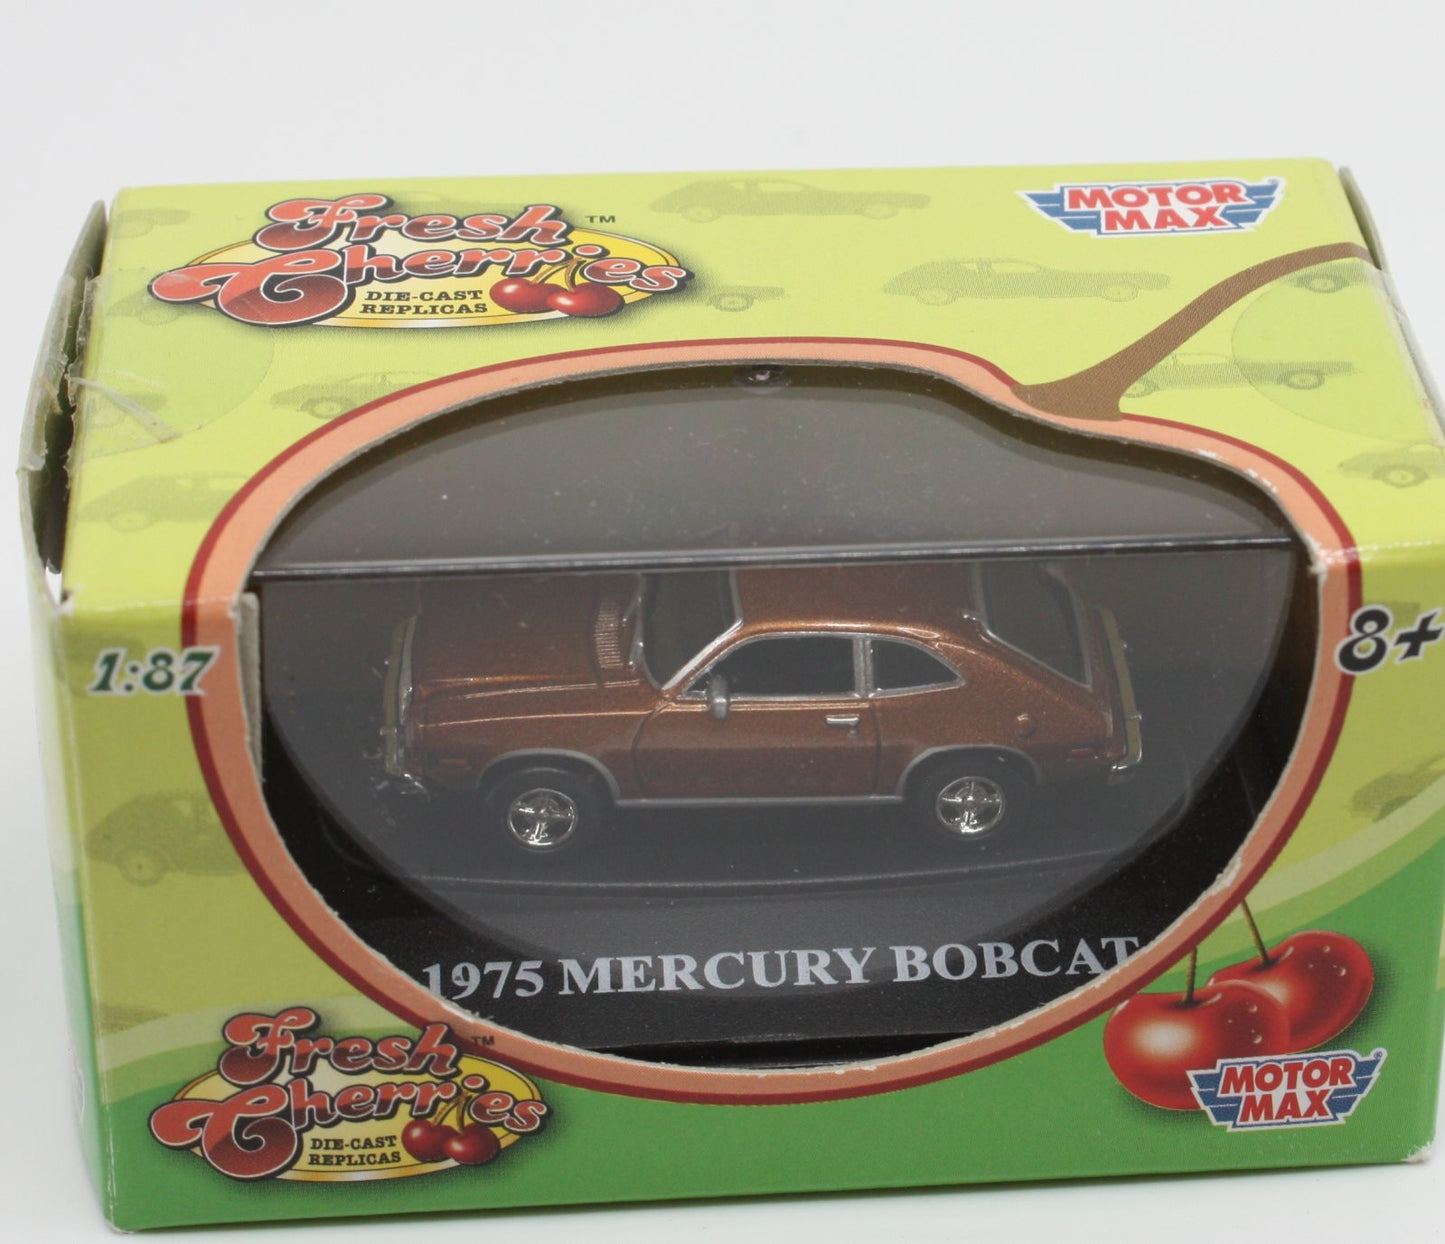 Motor Max 75950FC HO Fresh Cherries 1975 Mercury Bobcat